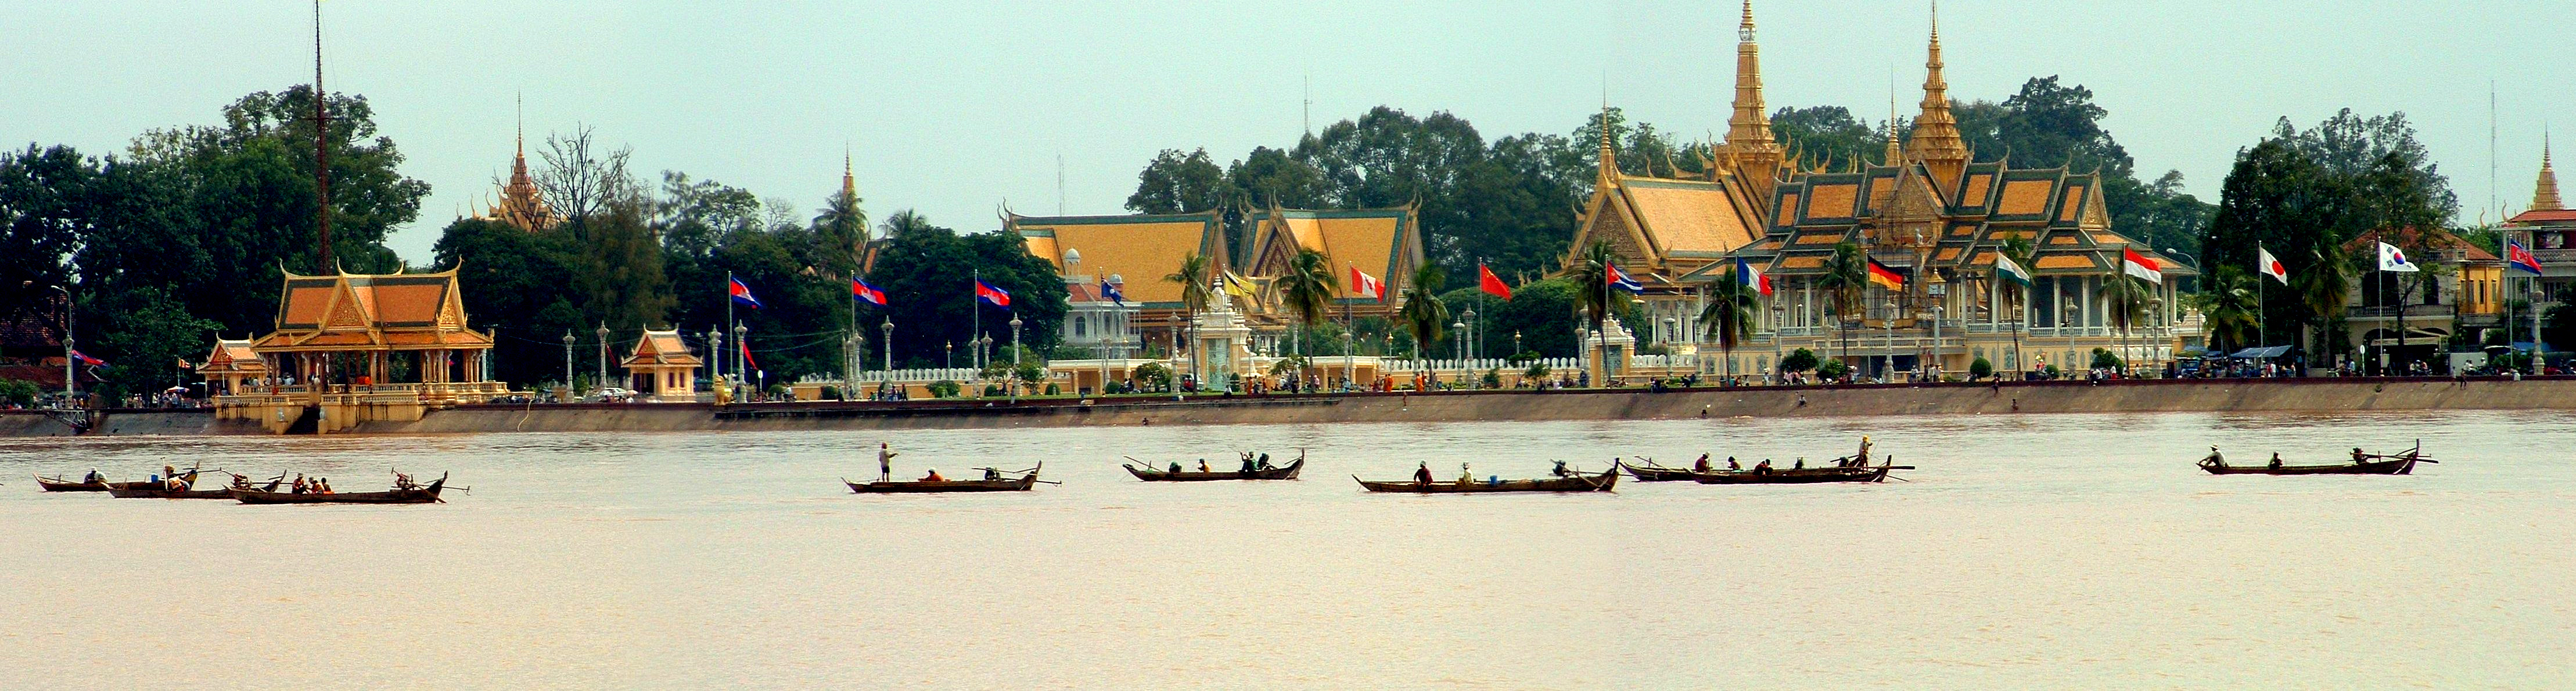 Koninklijk paleis van Cambodja in Phnom Penh